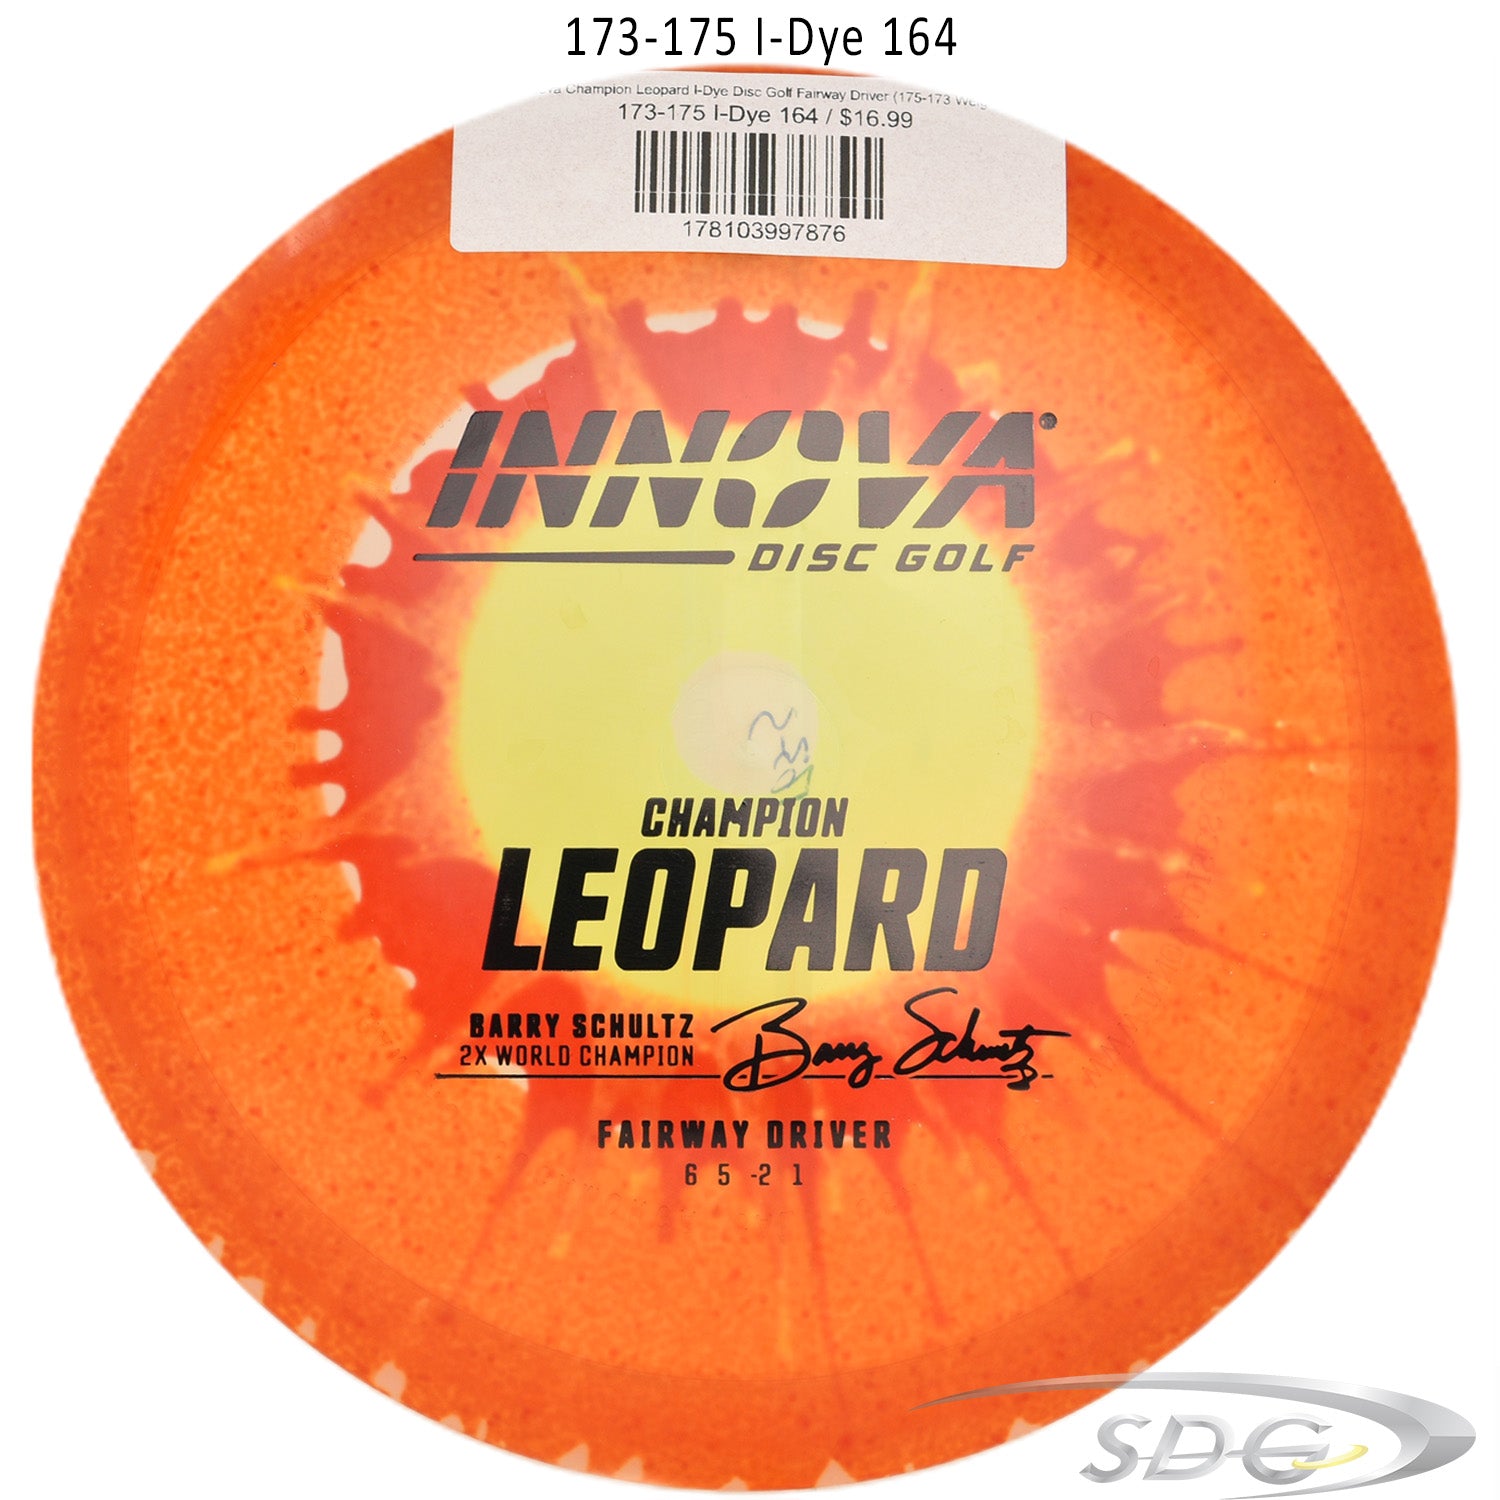 innova-champion-leopard-i-dye-disc-golf-fairway-driver 173-175 I-Dye 164 